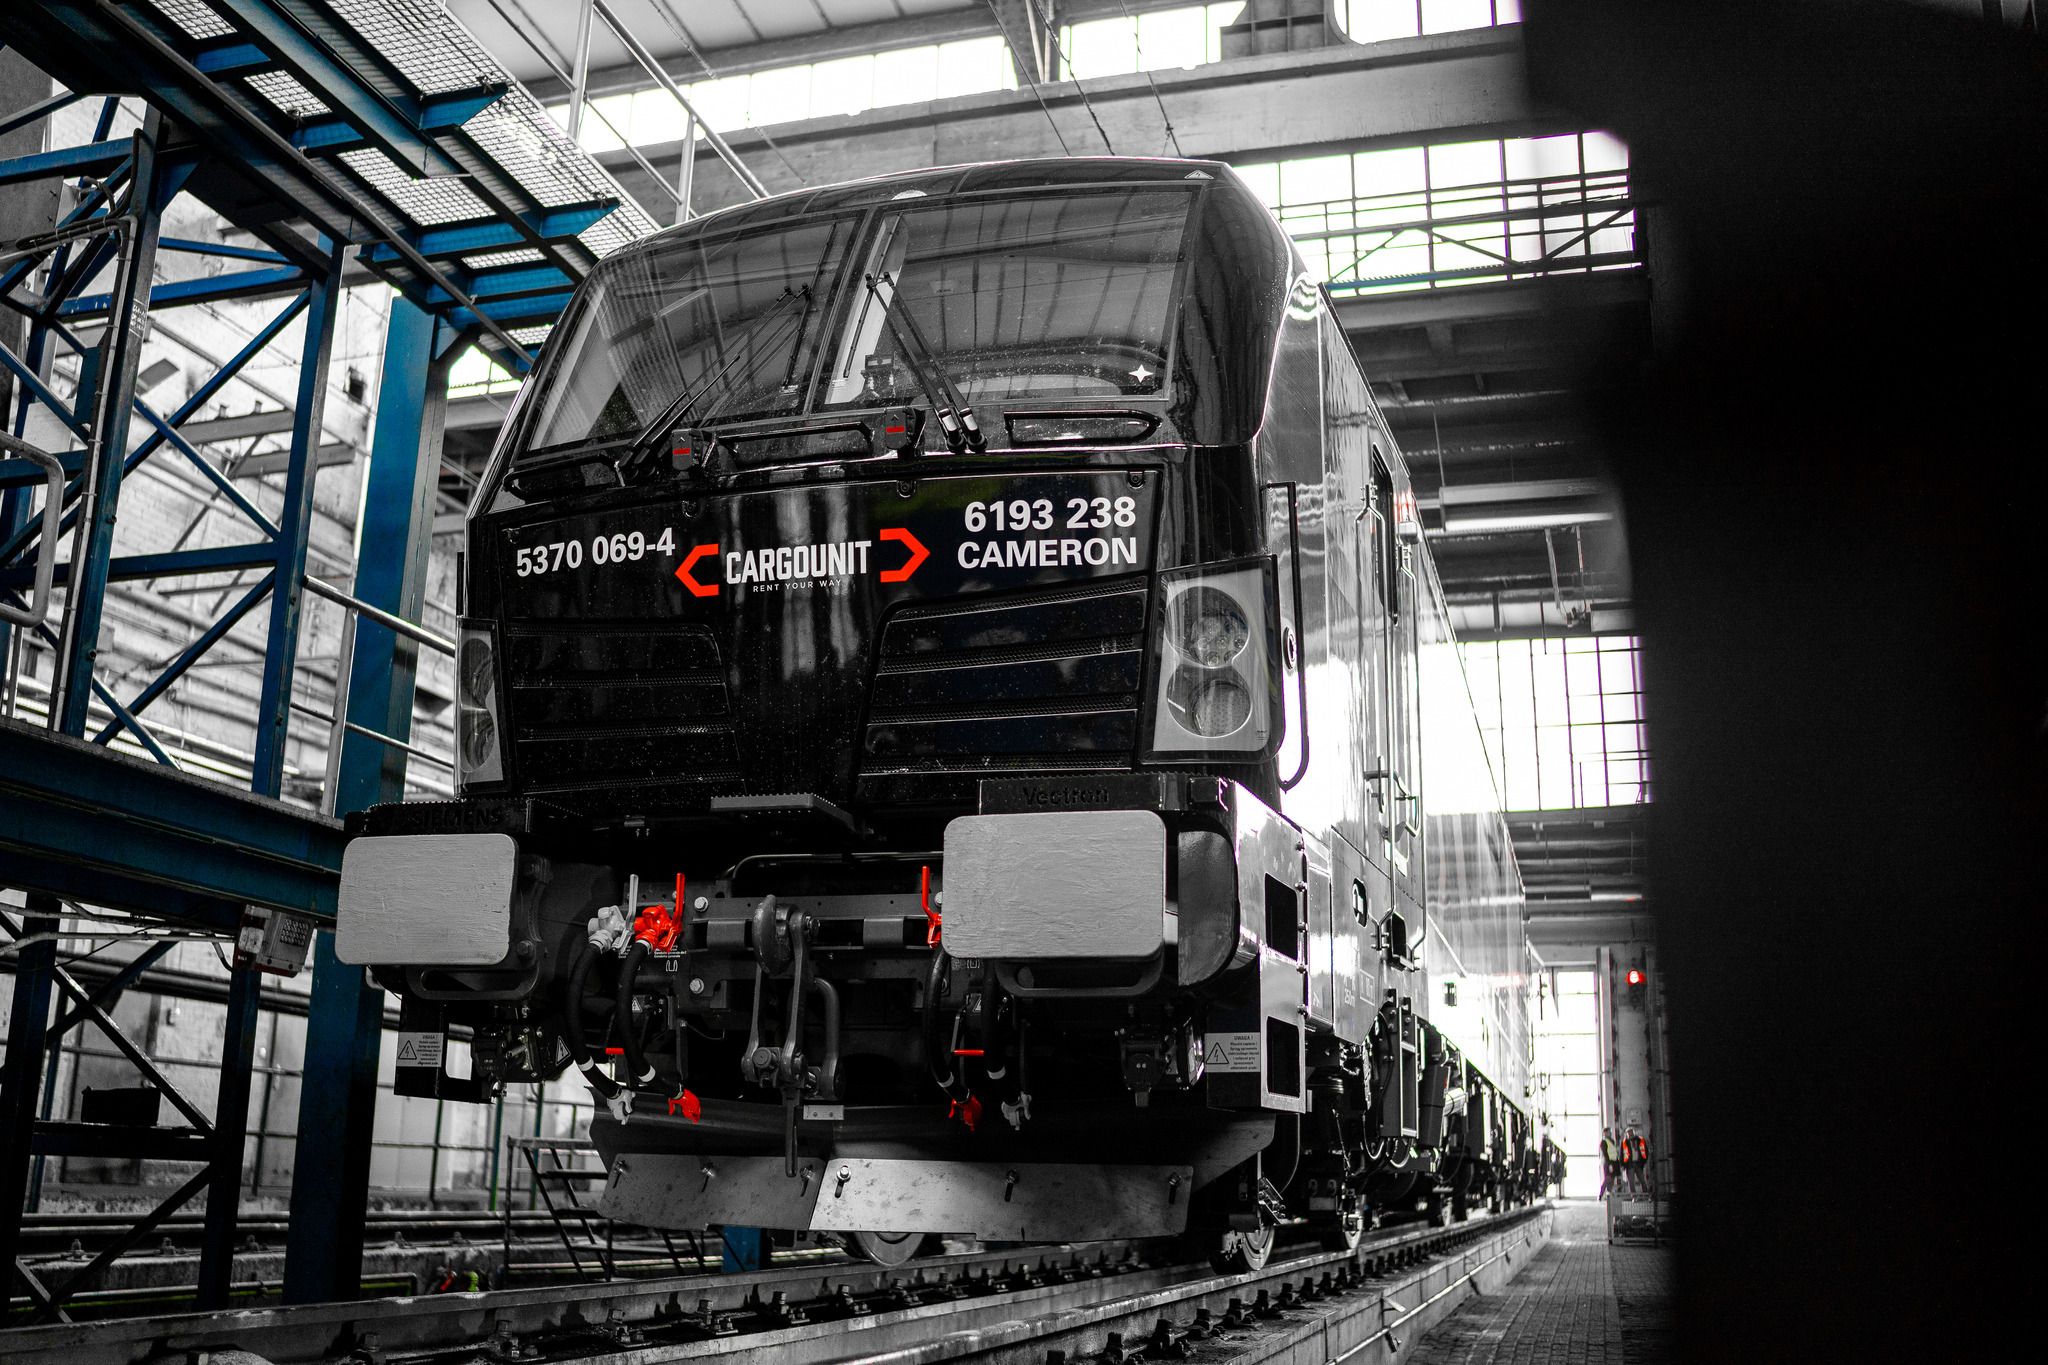 Cargounit to acquire 100 Siemens locomotives